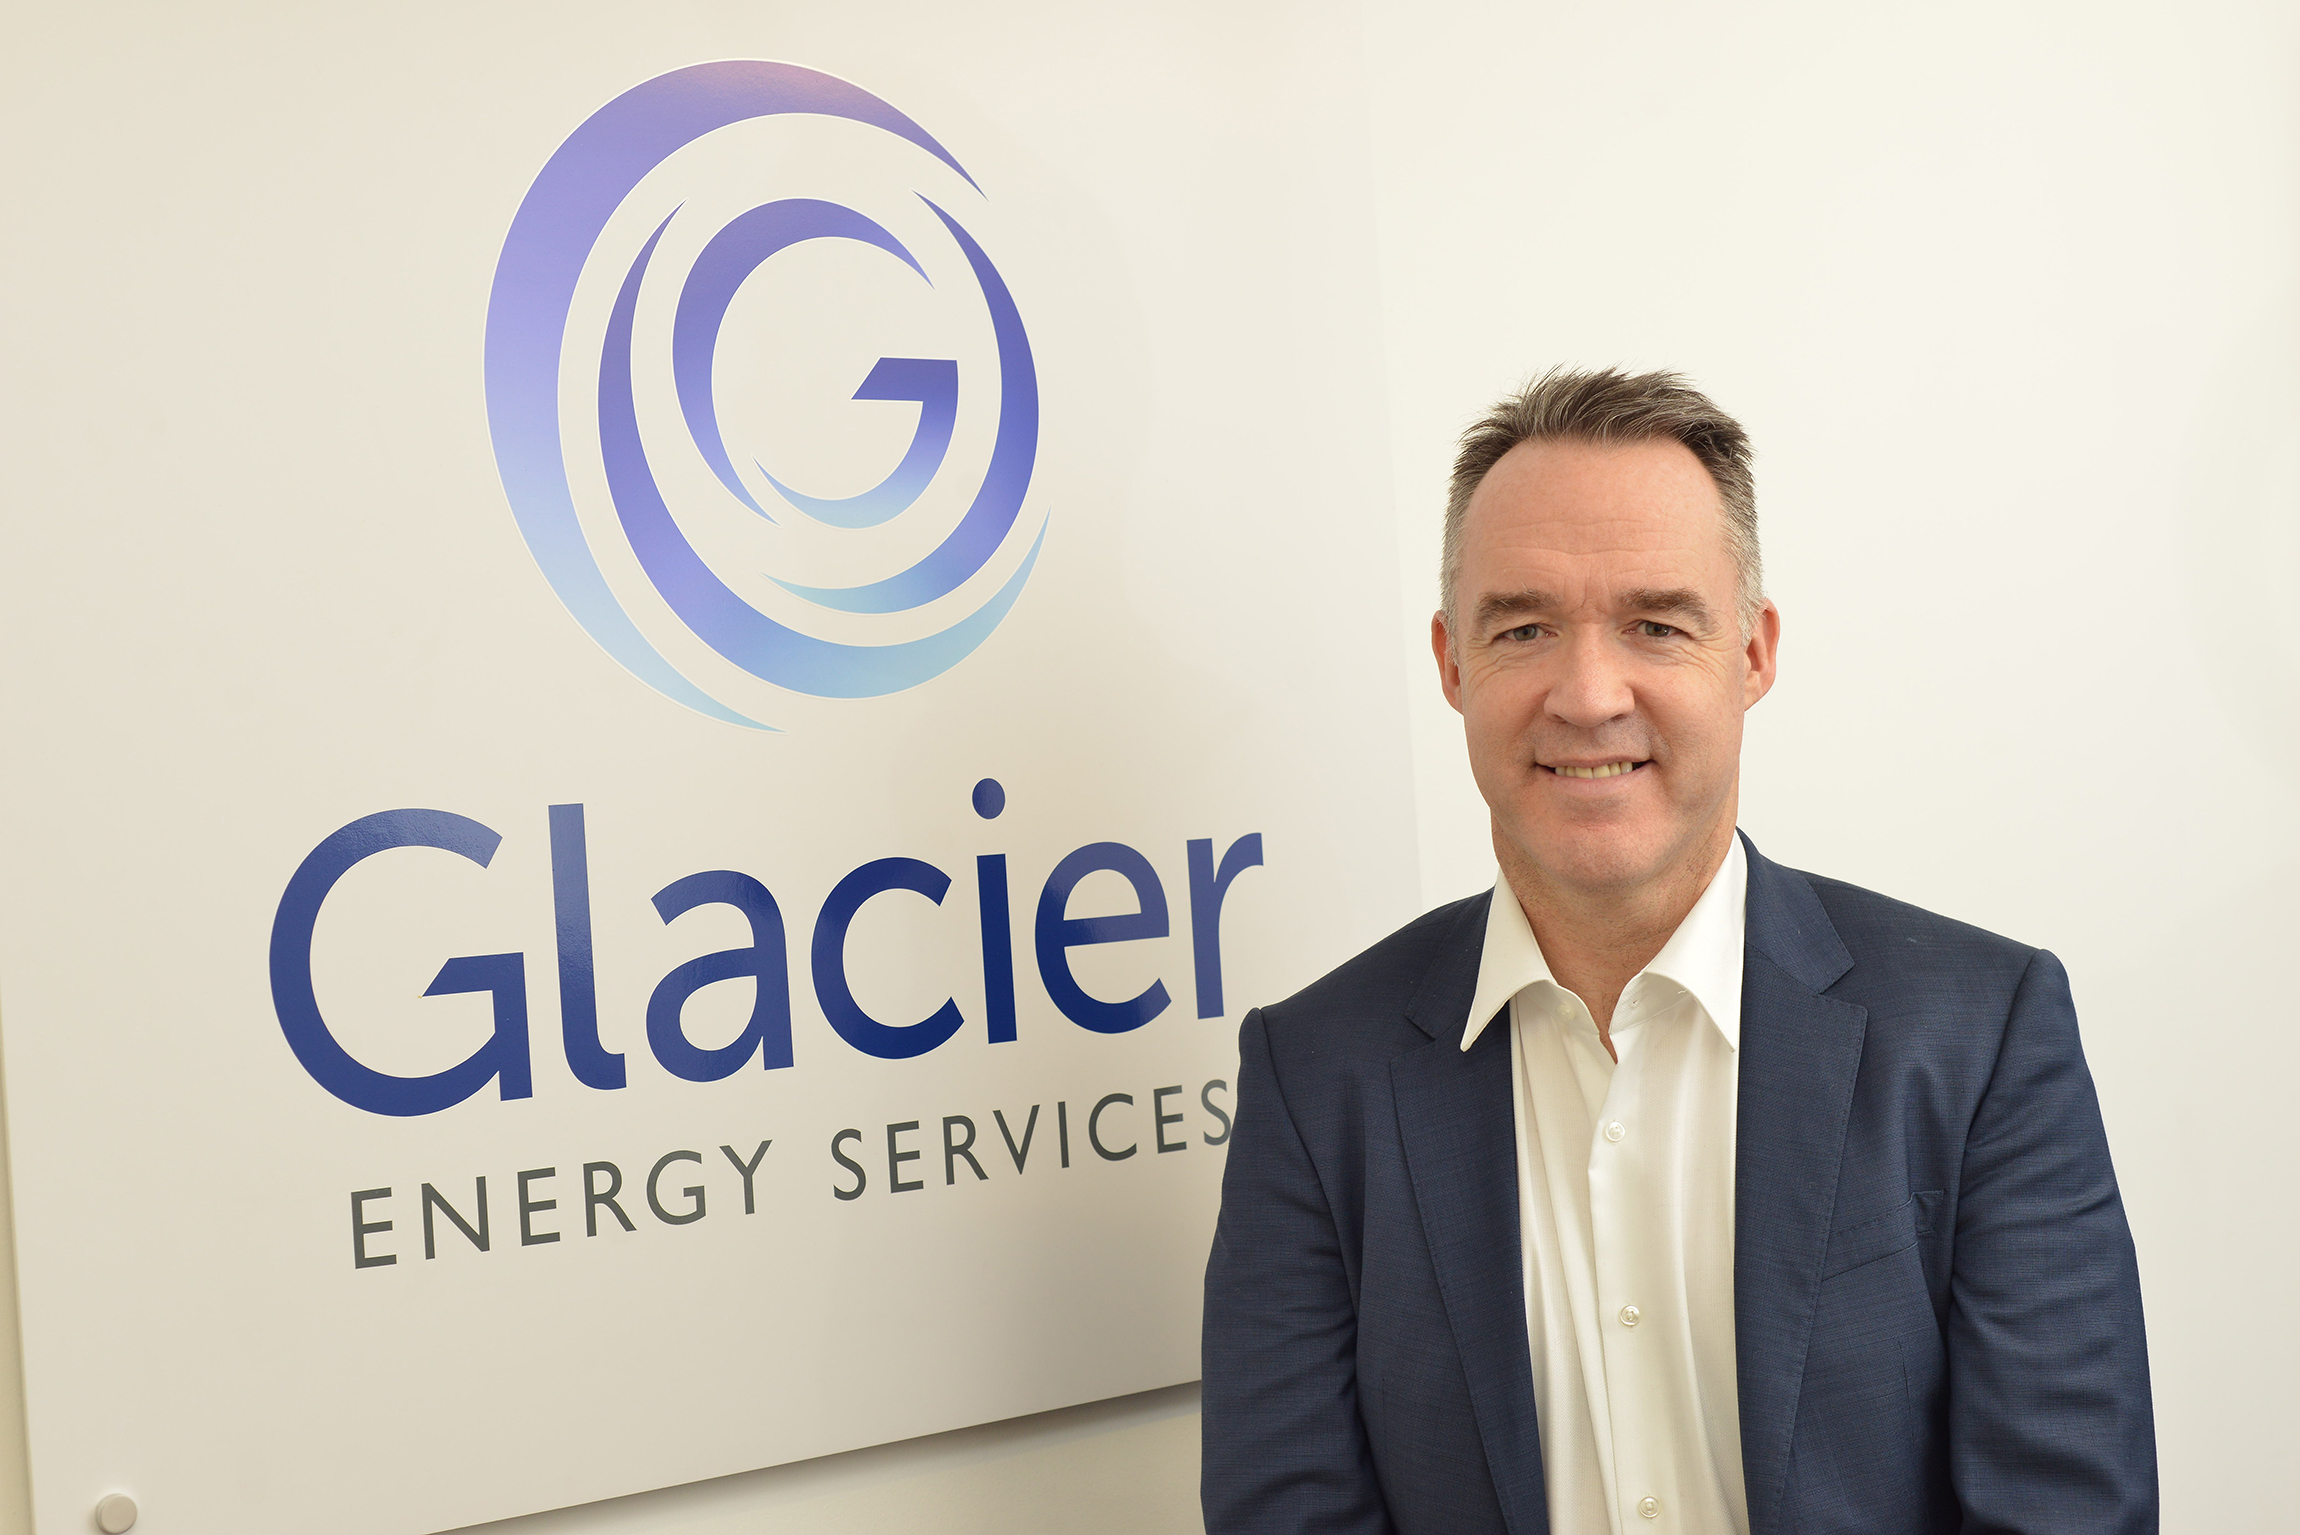 Glacier executive chairman Scott Martin